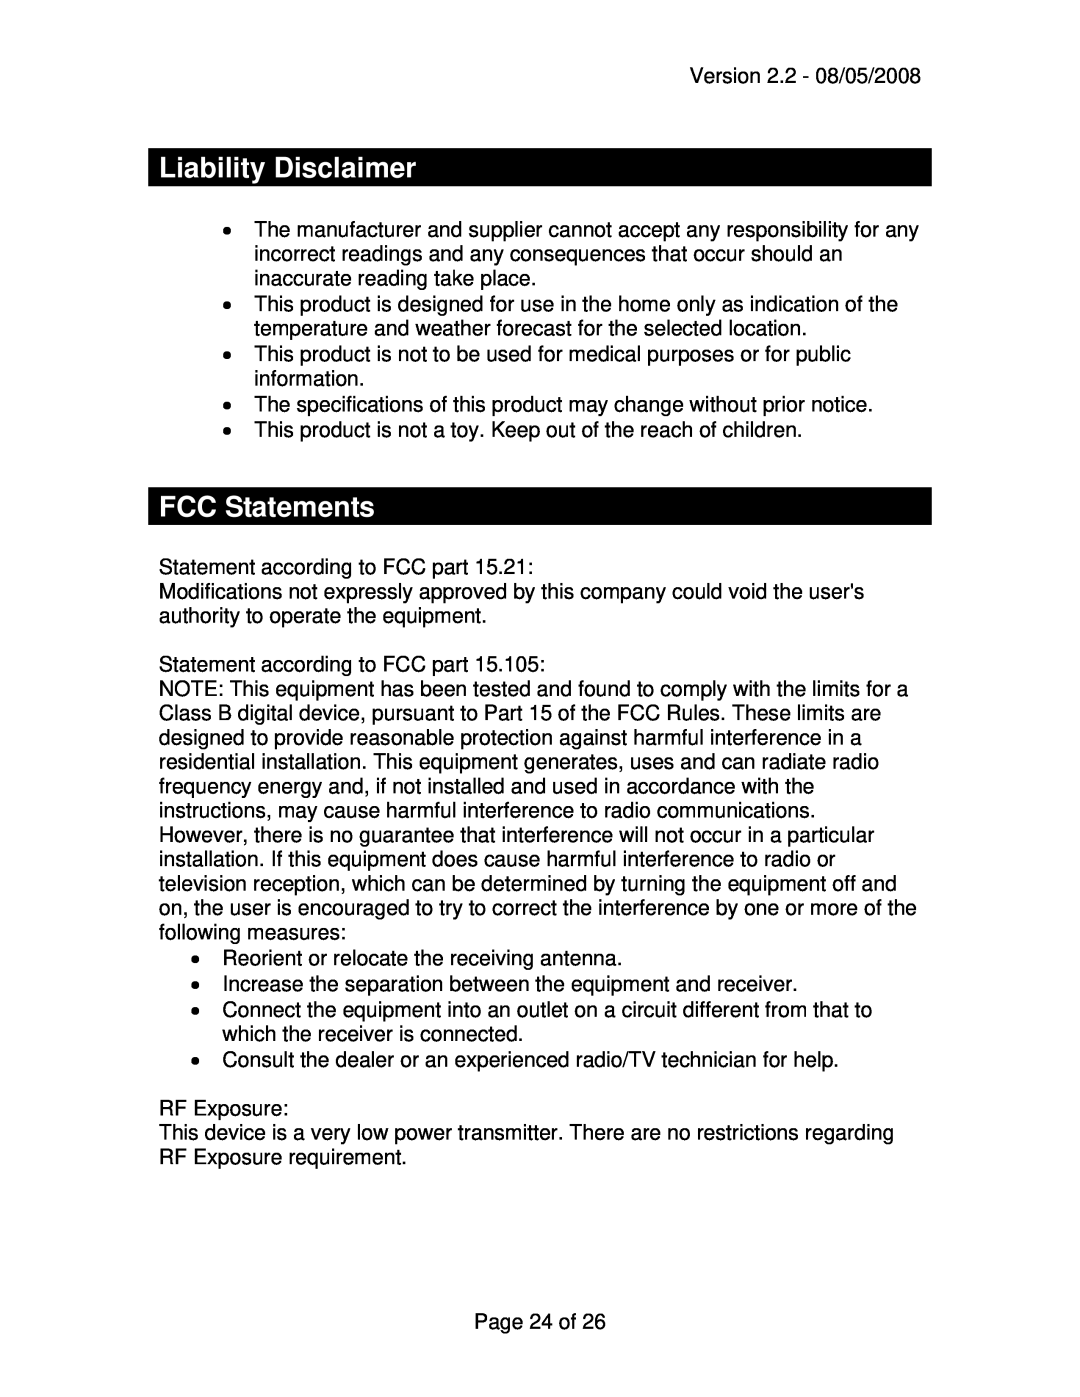 La Crosse Technology WD-3105 owner manual Liability Disclaimer, FCC Statements 